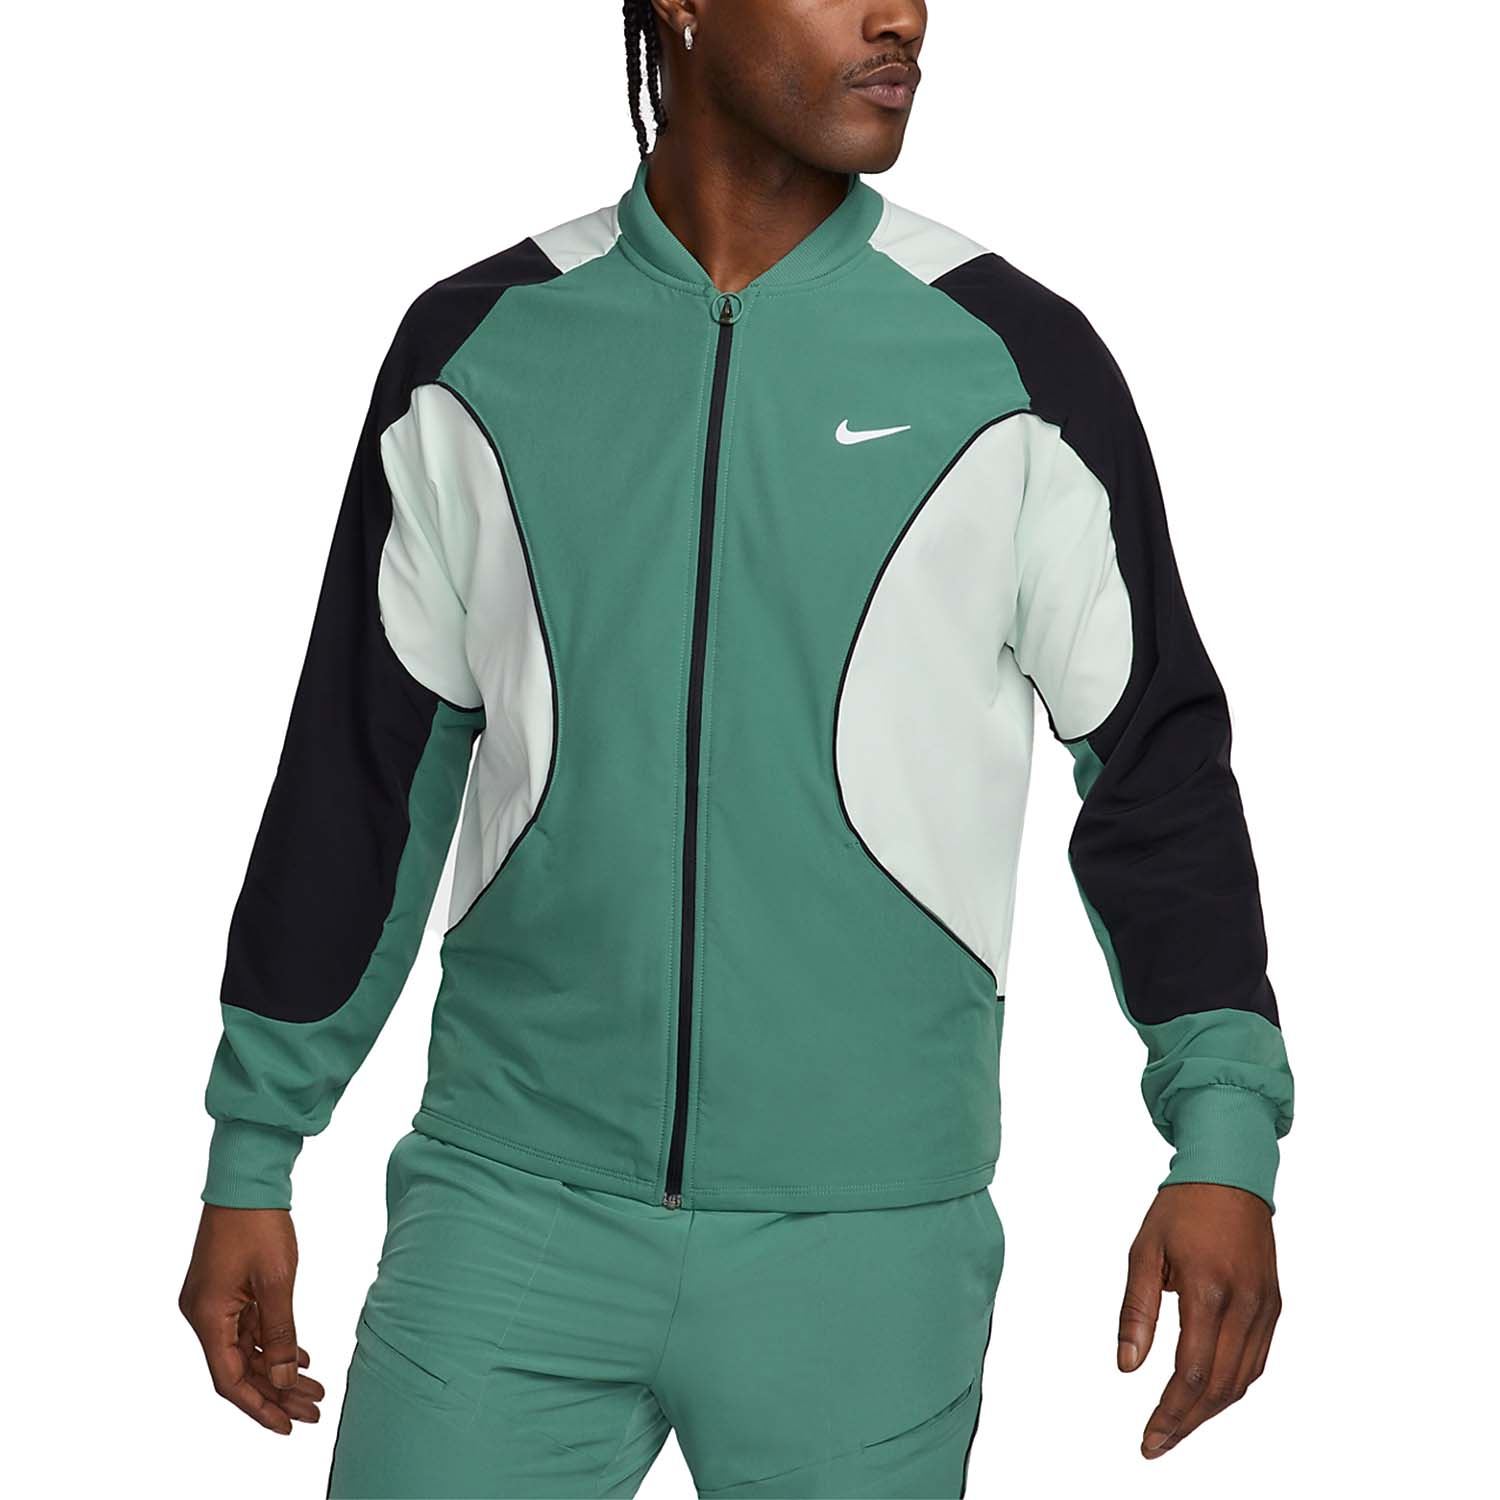 Nike Court Advantage Jacket - Bicoastal/Black/Barely Green/White